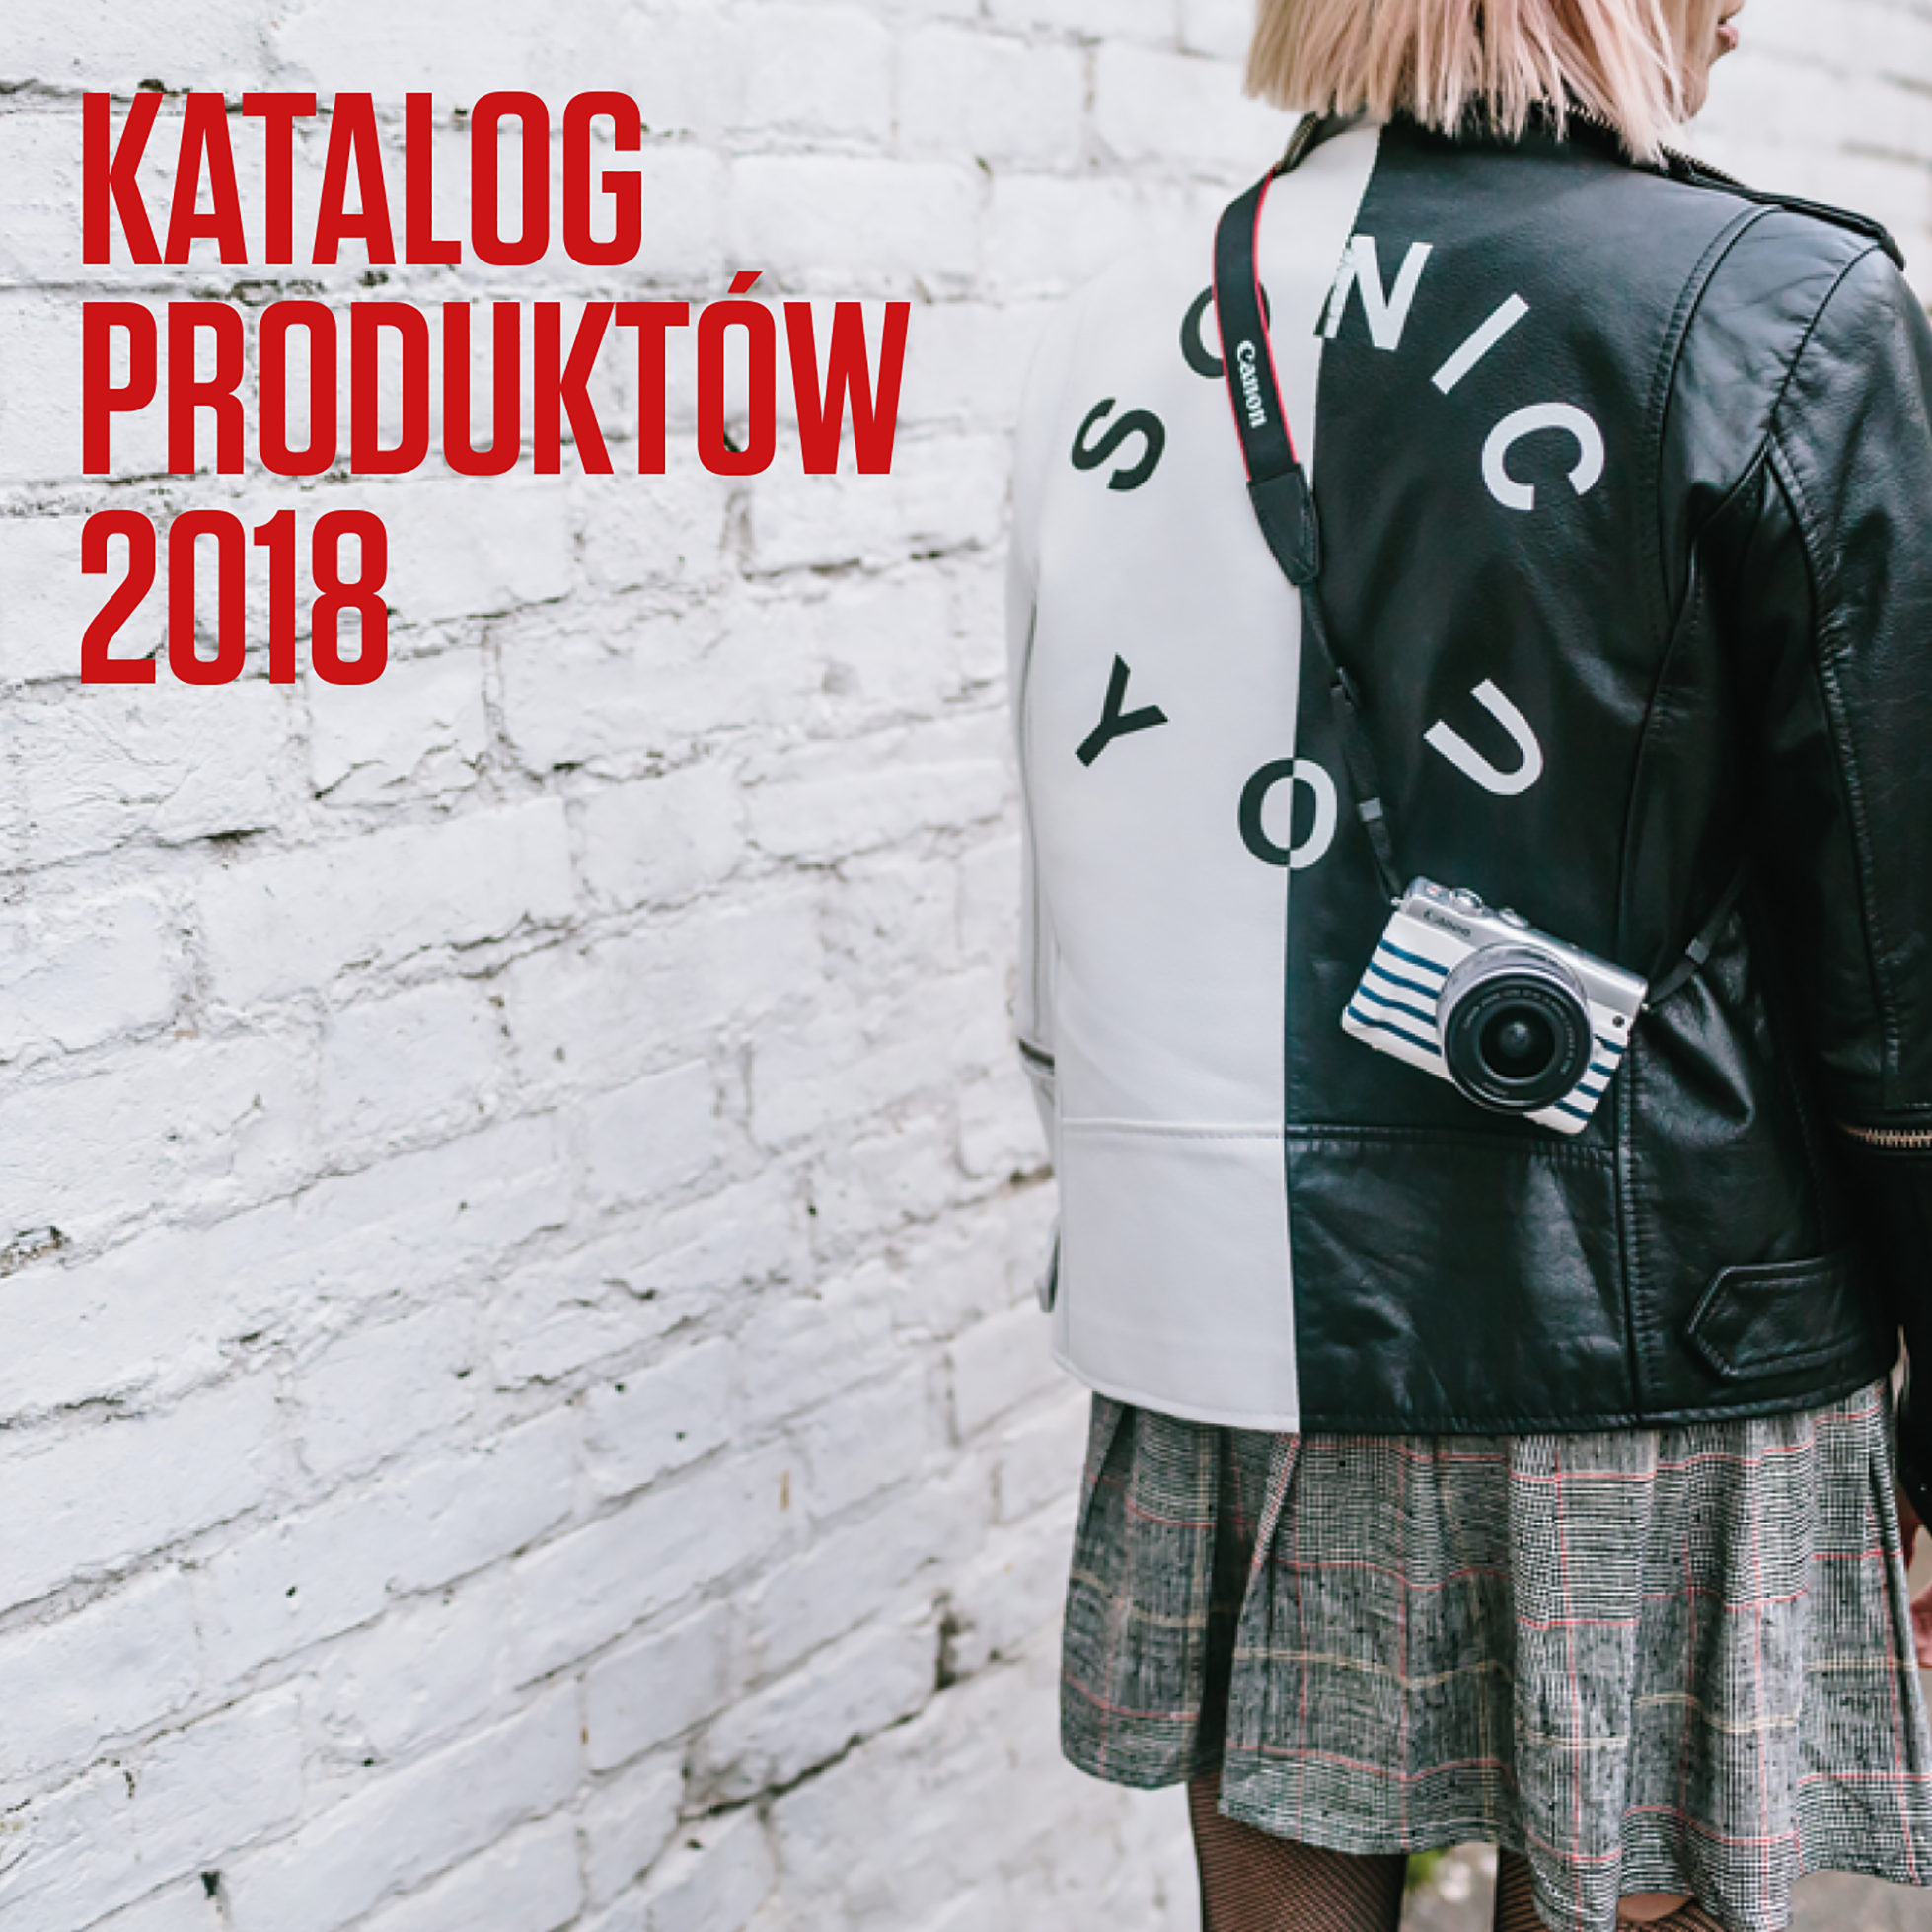 Katalog produktów 2018